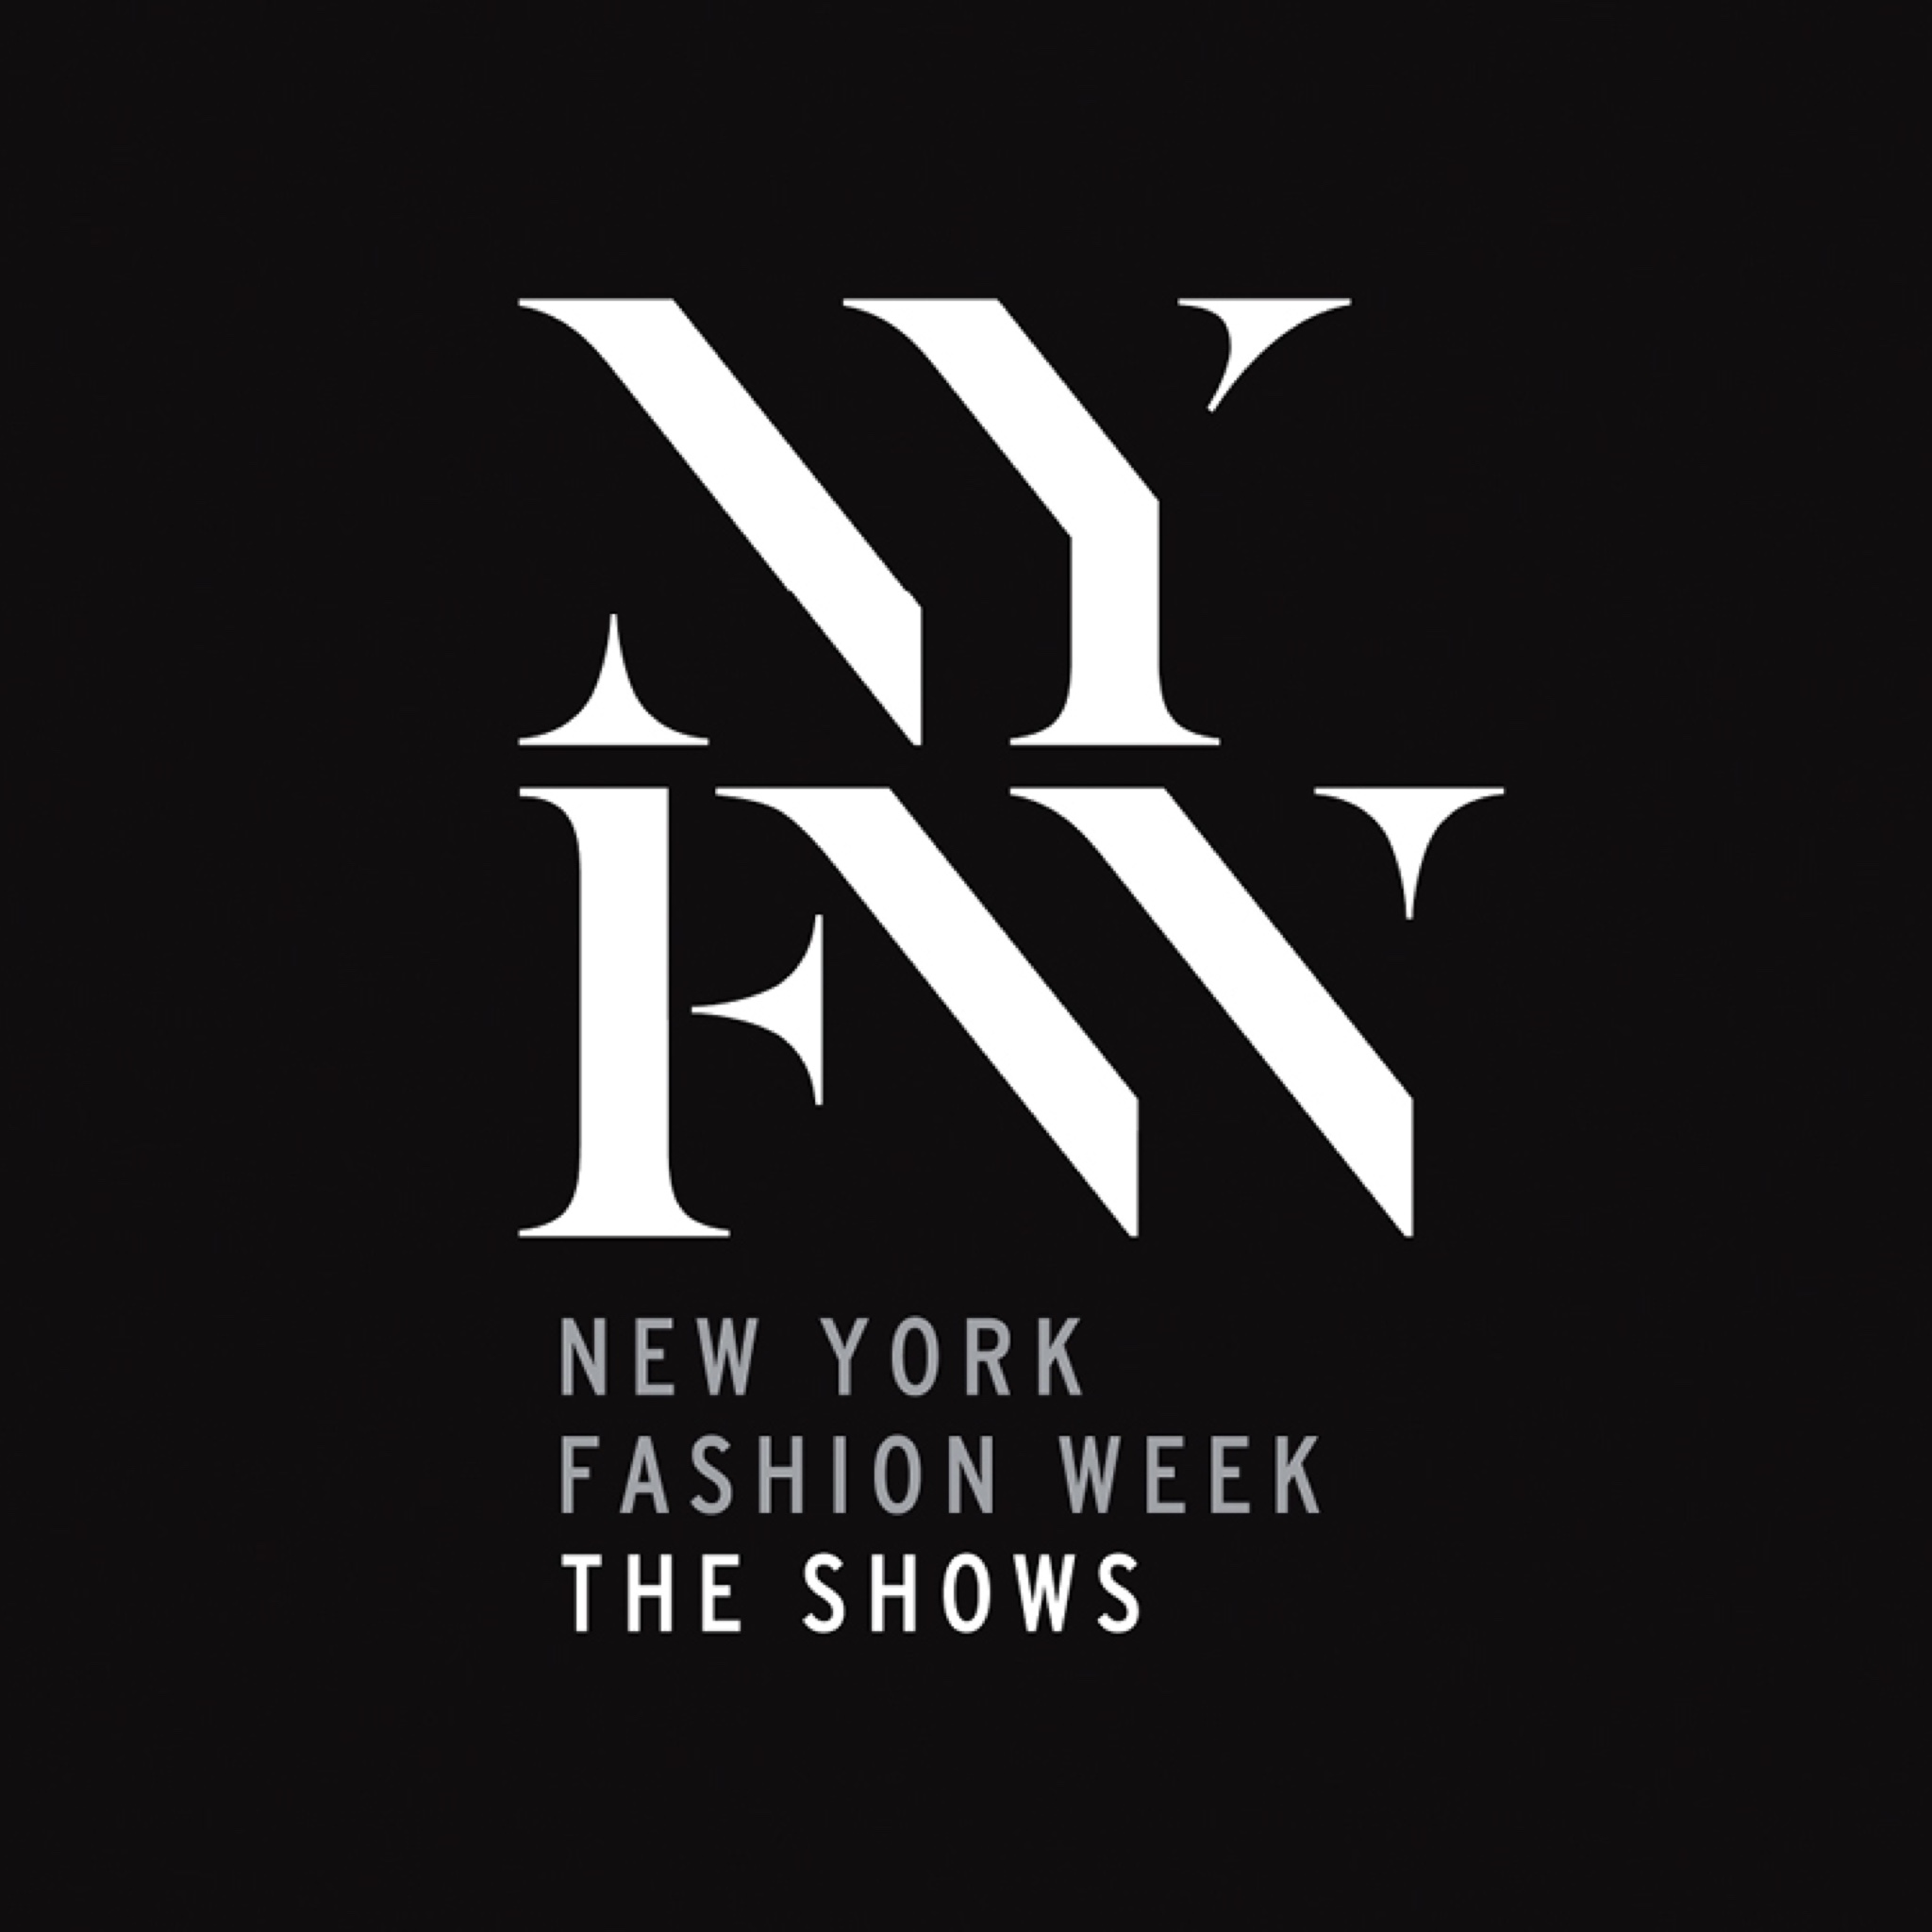 United States 营销公司 Altered State Productions 通过 SEO 和数字营销帮助了 New York Fashion Week 发展业务